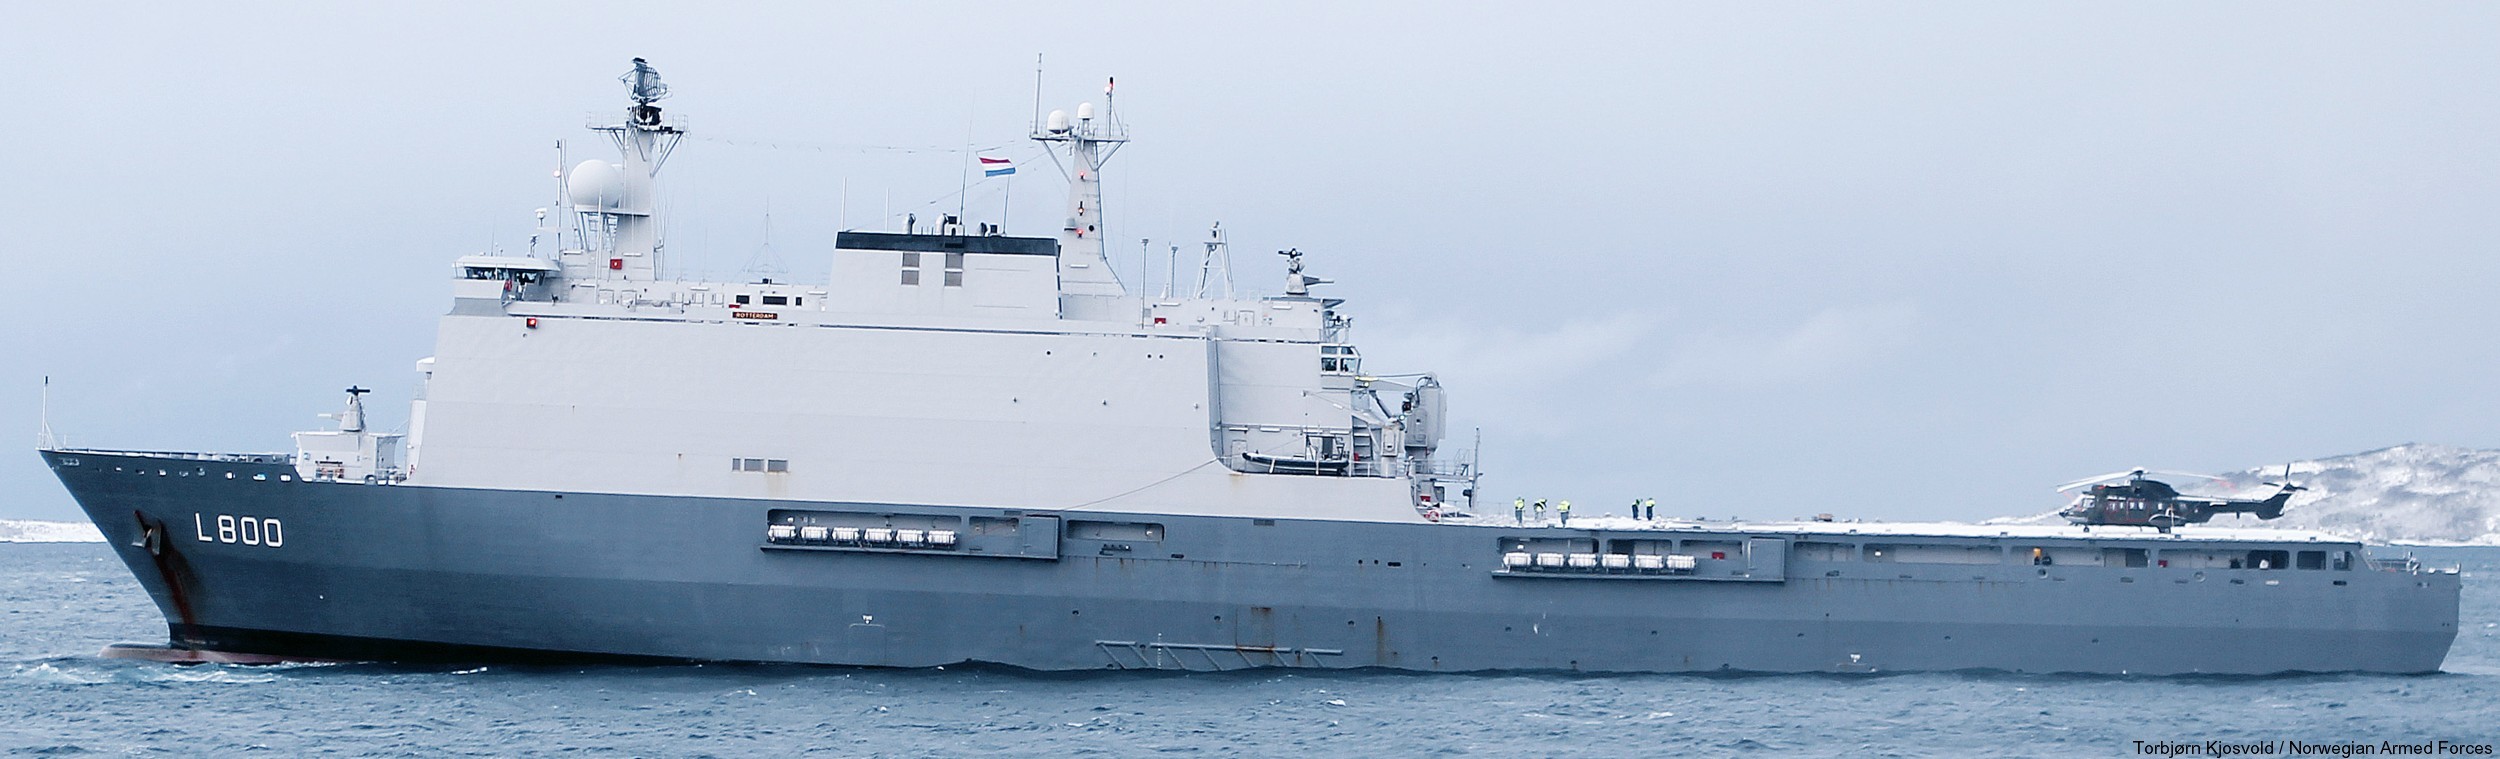 l-800 hnlms rotterdam amphibious landing ship dock lpd royal netherlands navy 28